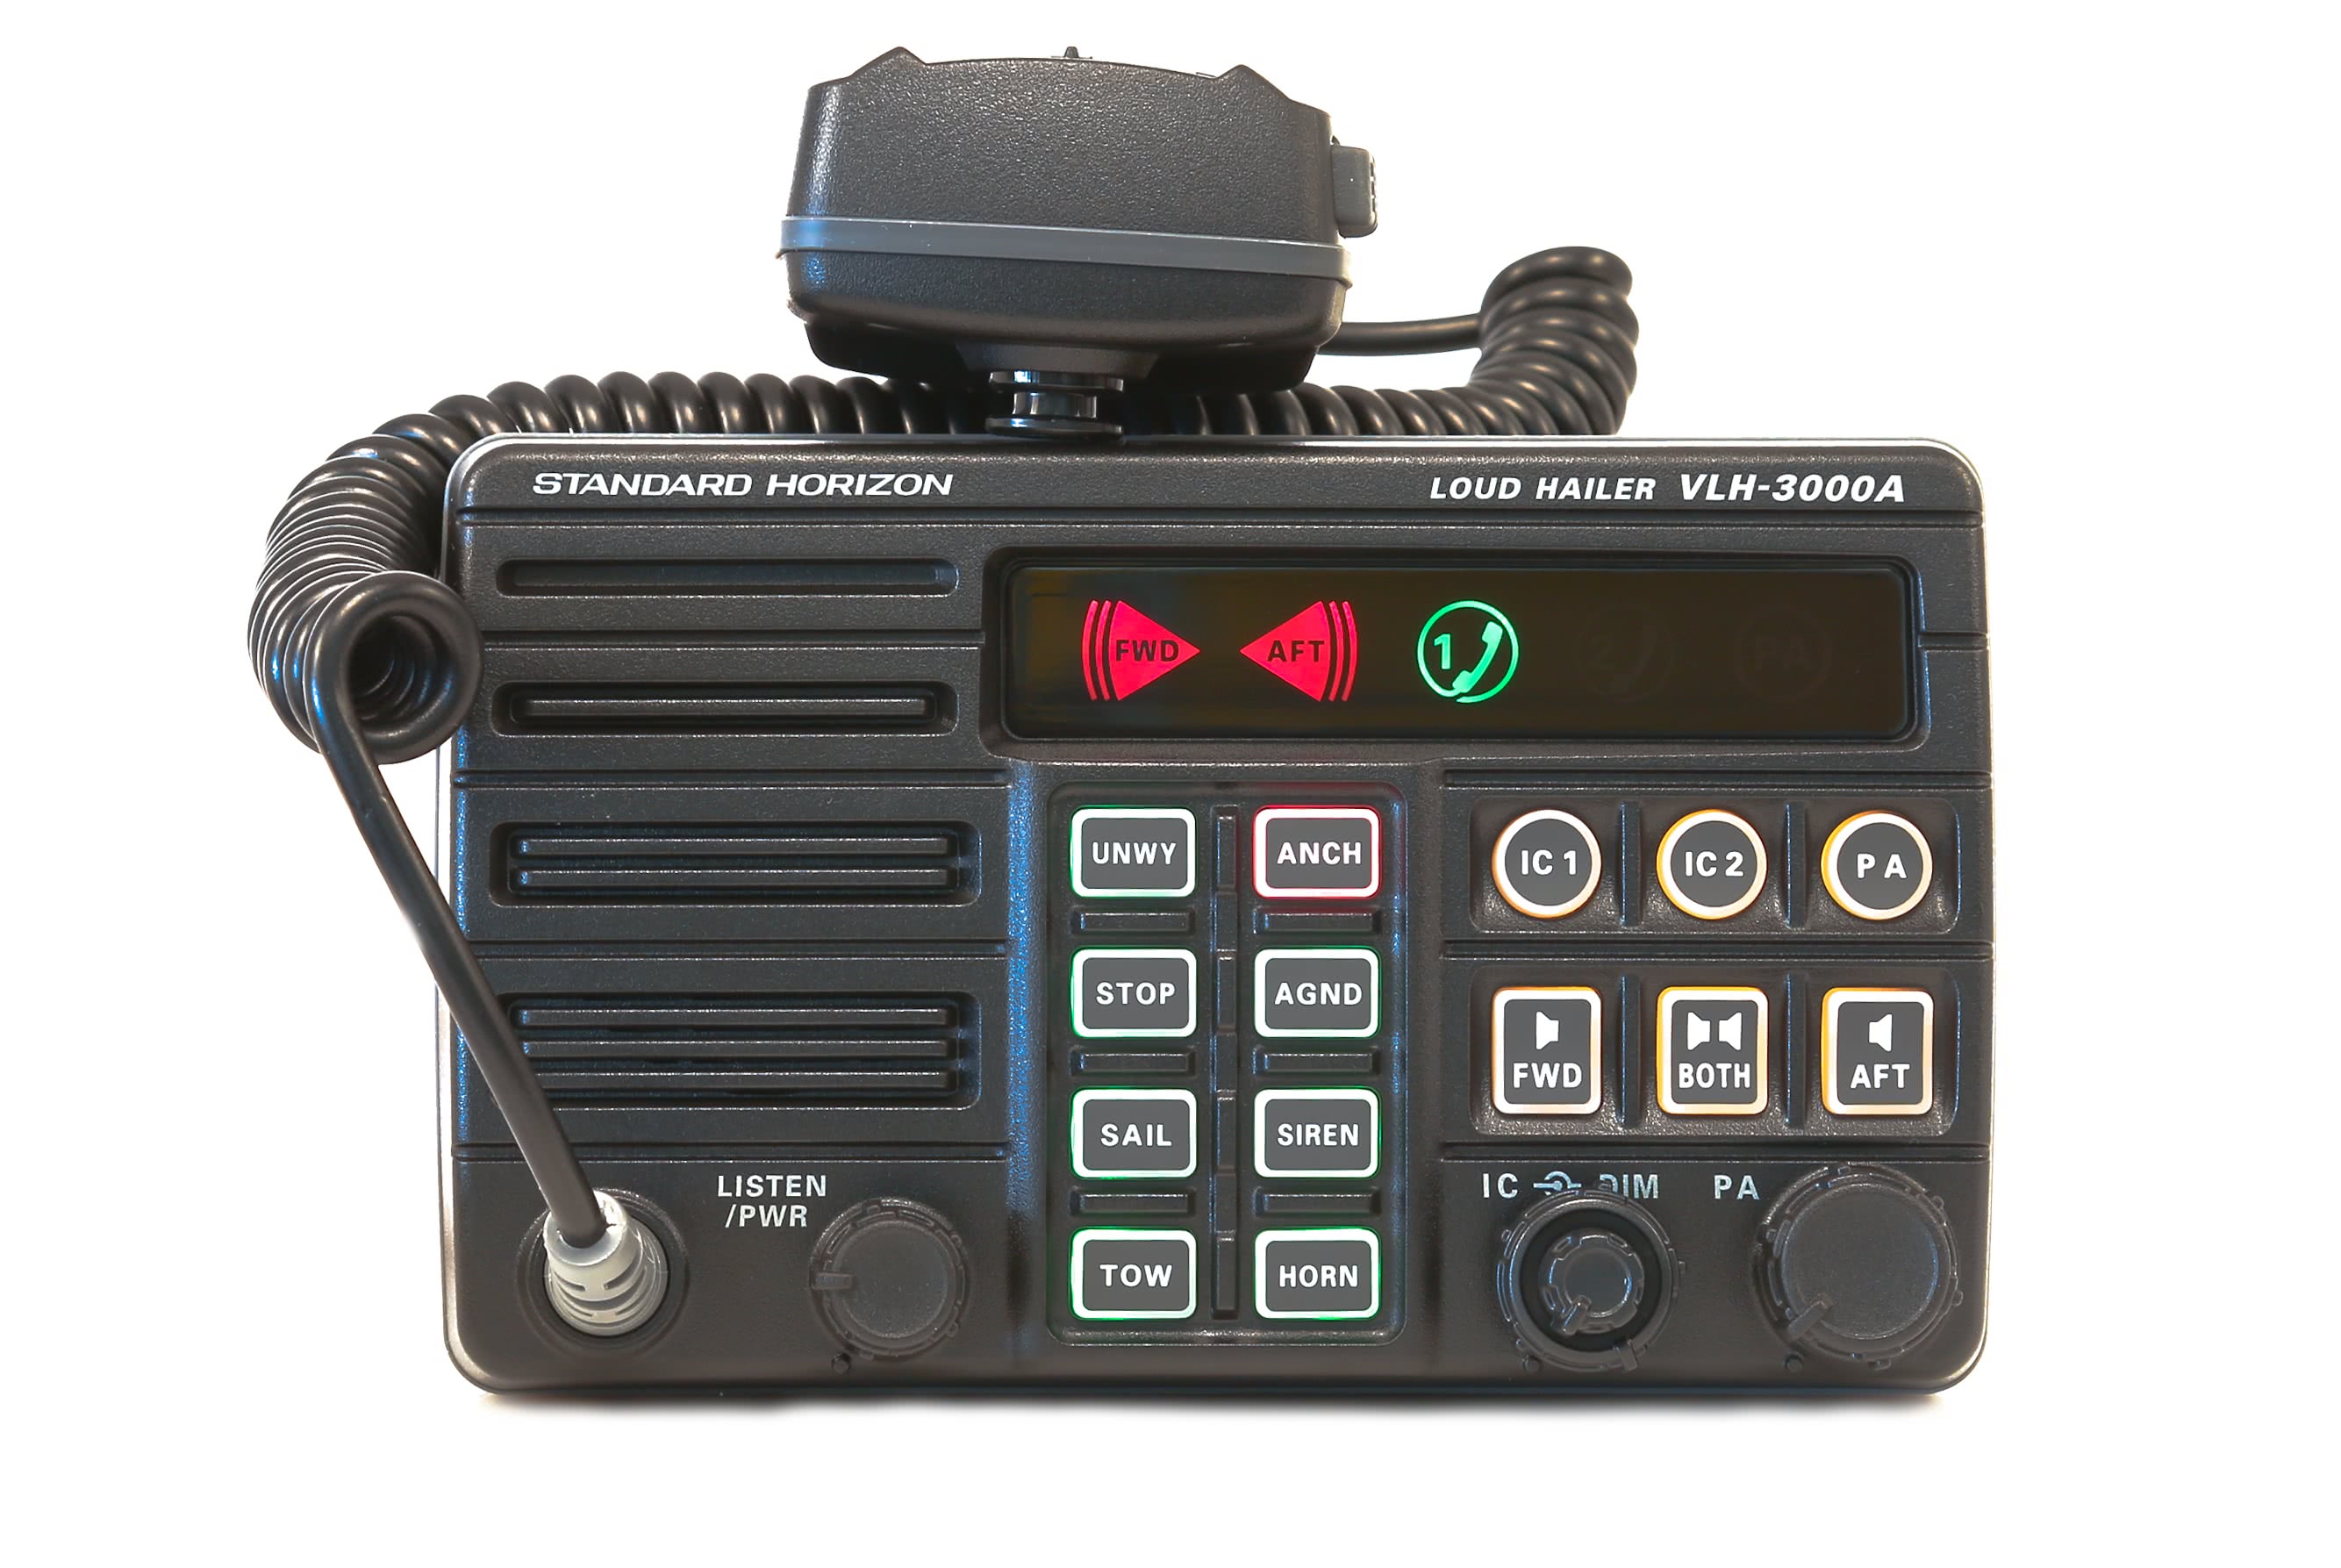 Домофон 3000. Standard Horizon VLH-3000a. VLH 3000. VLH-3000 сигнале голосовое устройство. VLH.